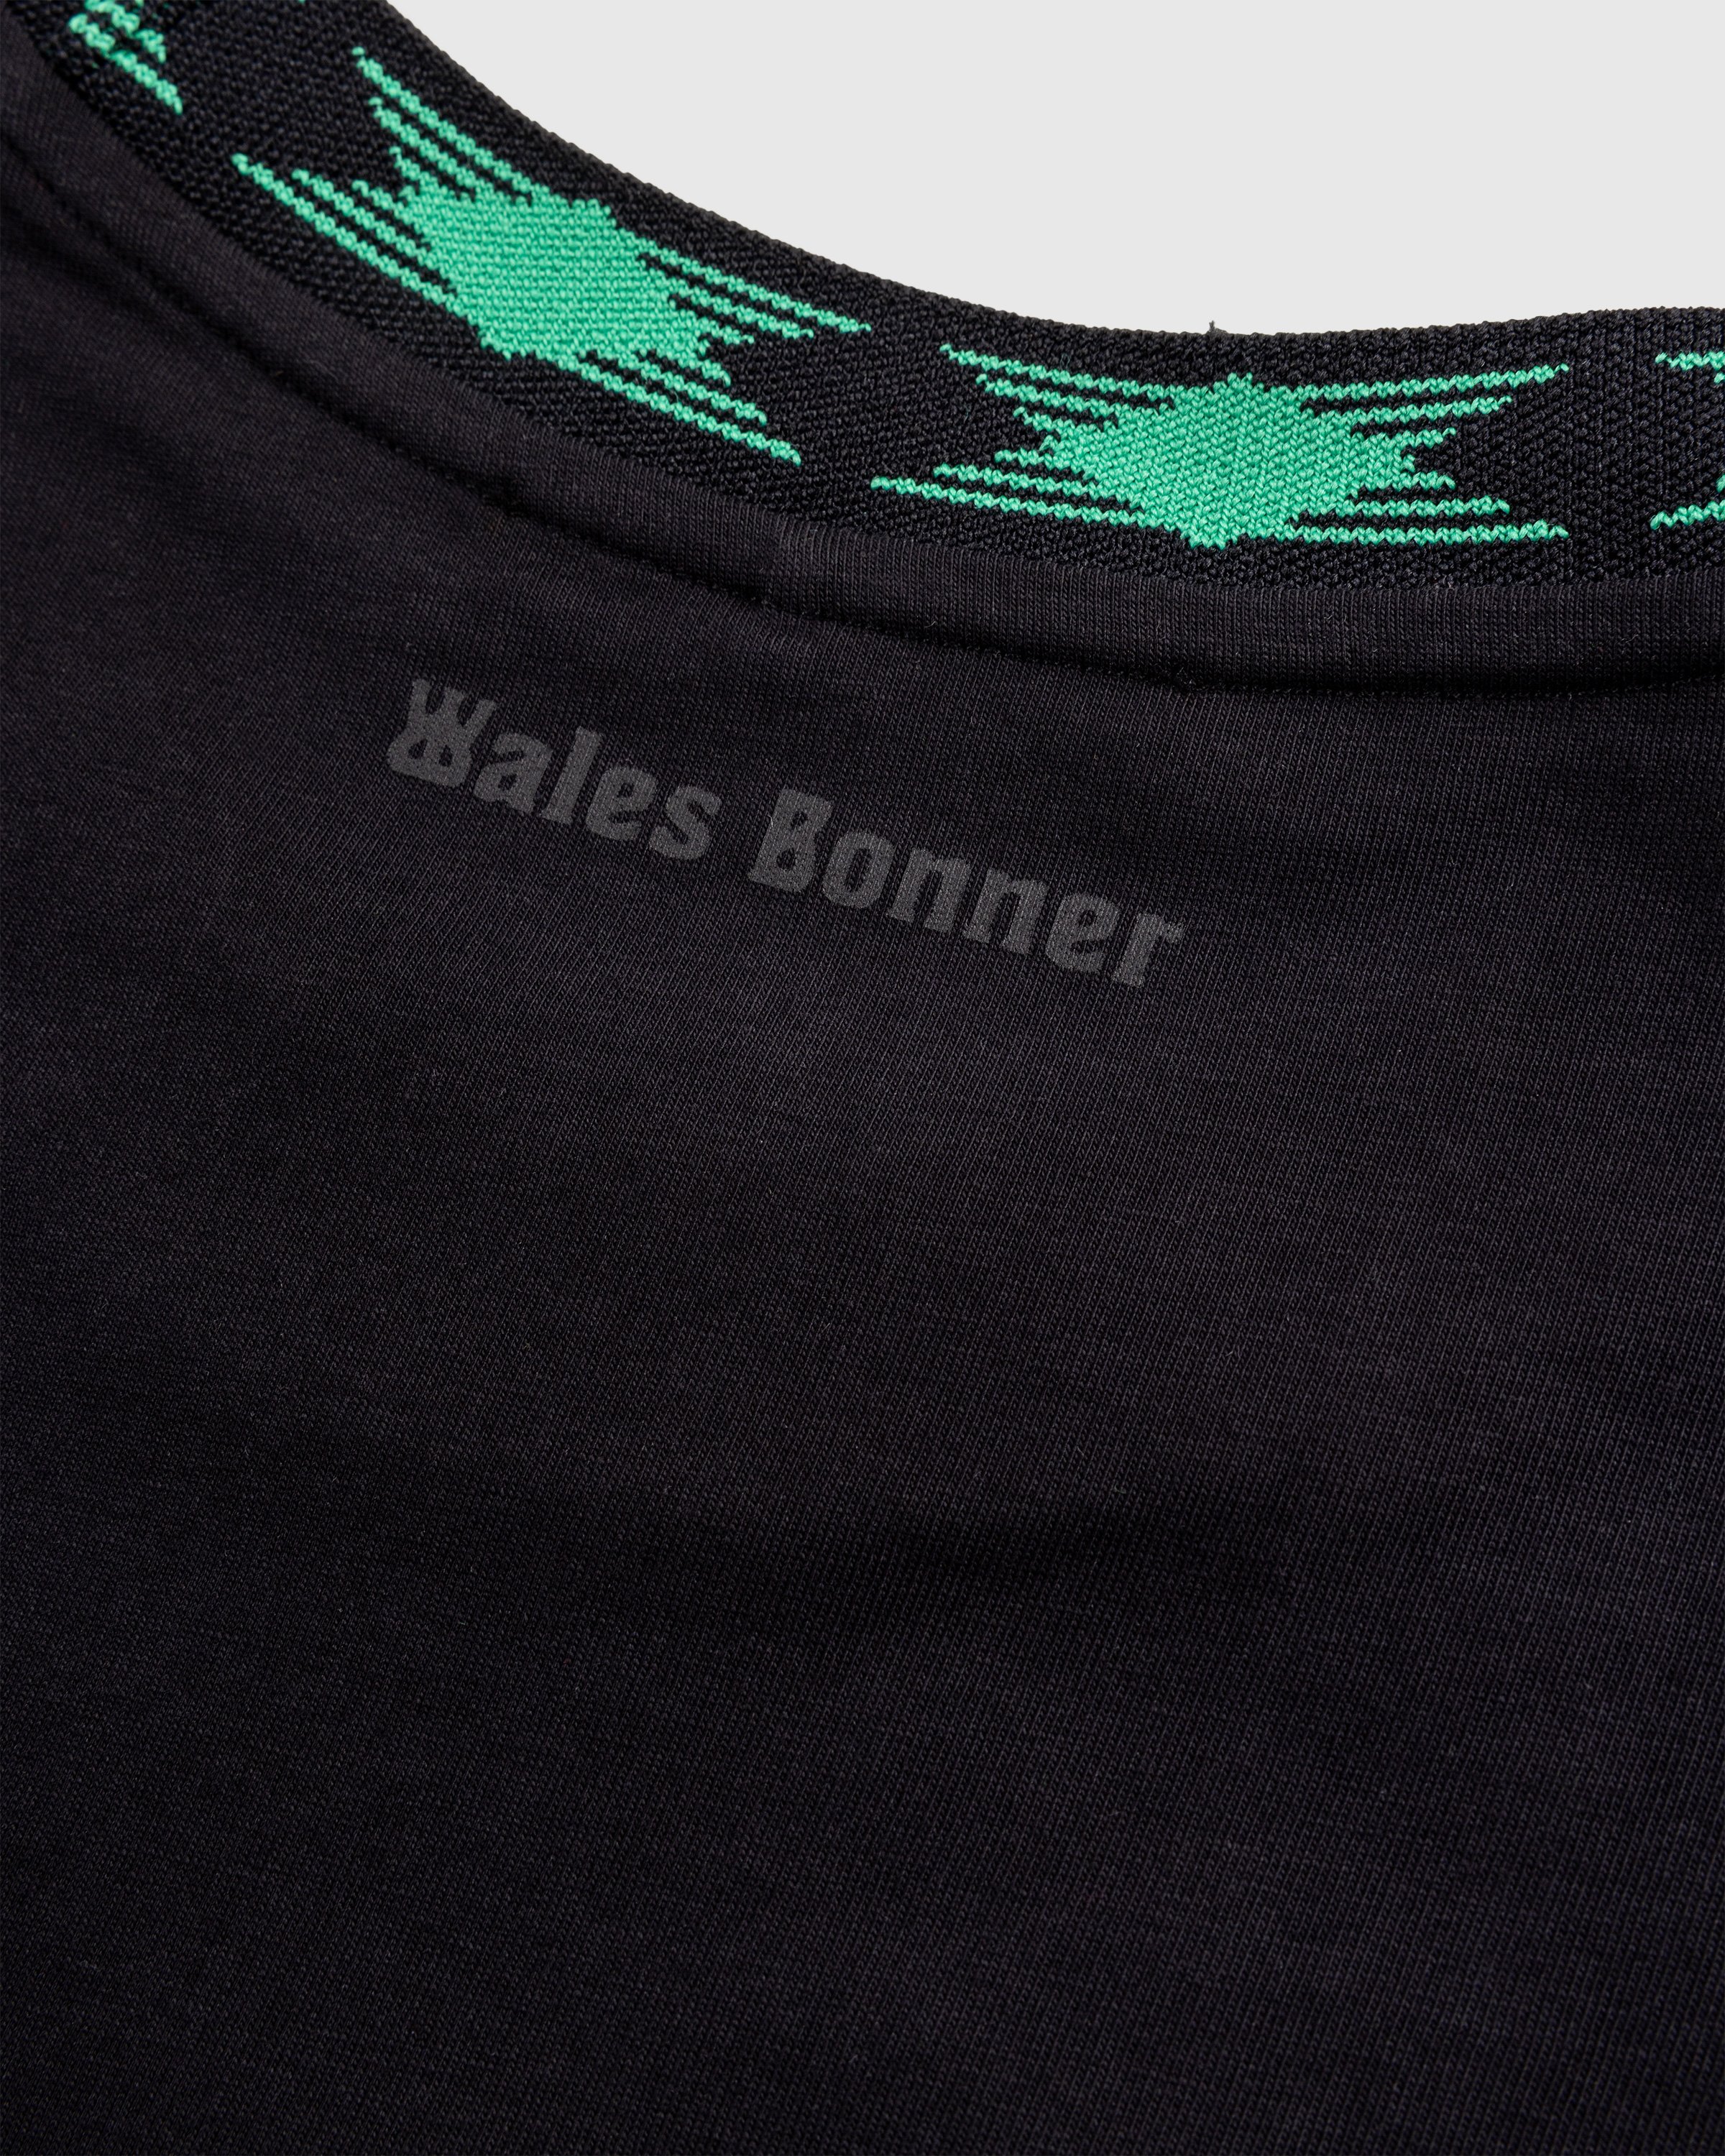 Wales Bonner - Plain T-Shirt Jersey Black - Clothing - Black - Image 7